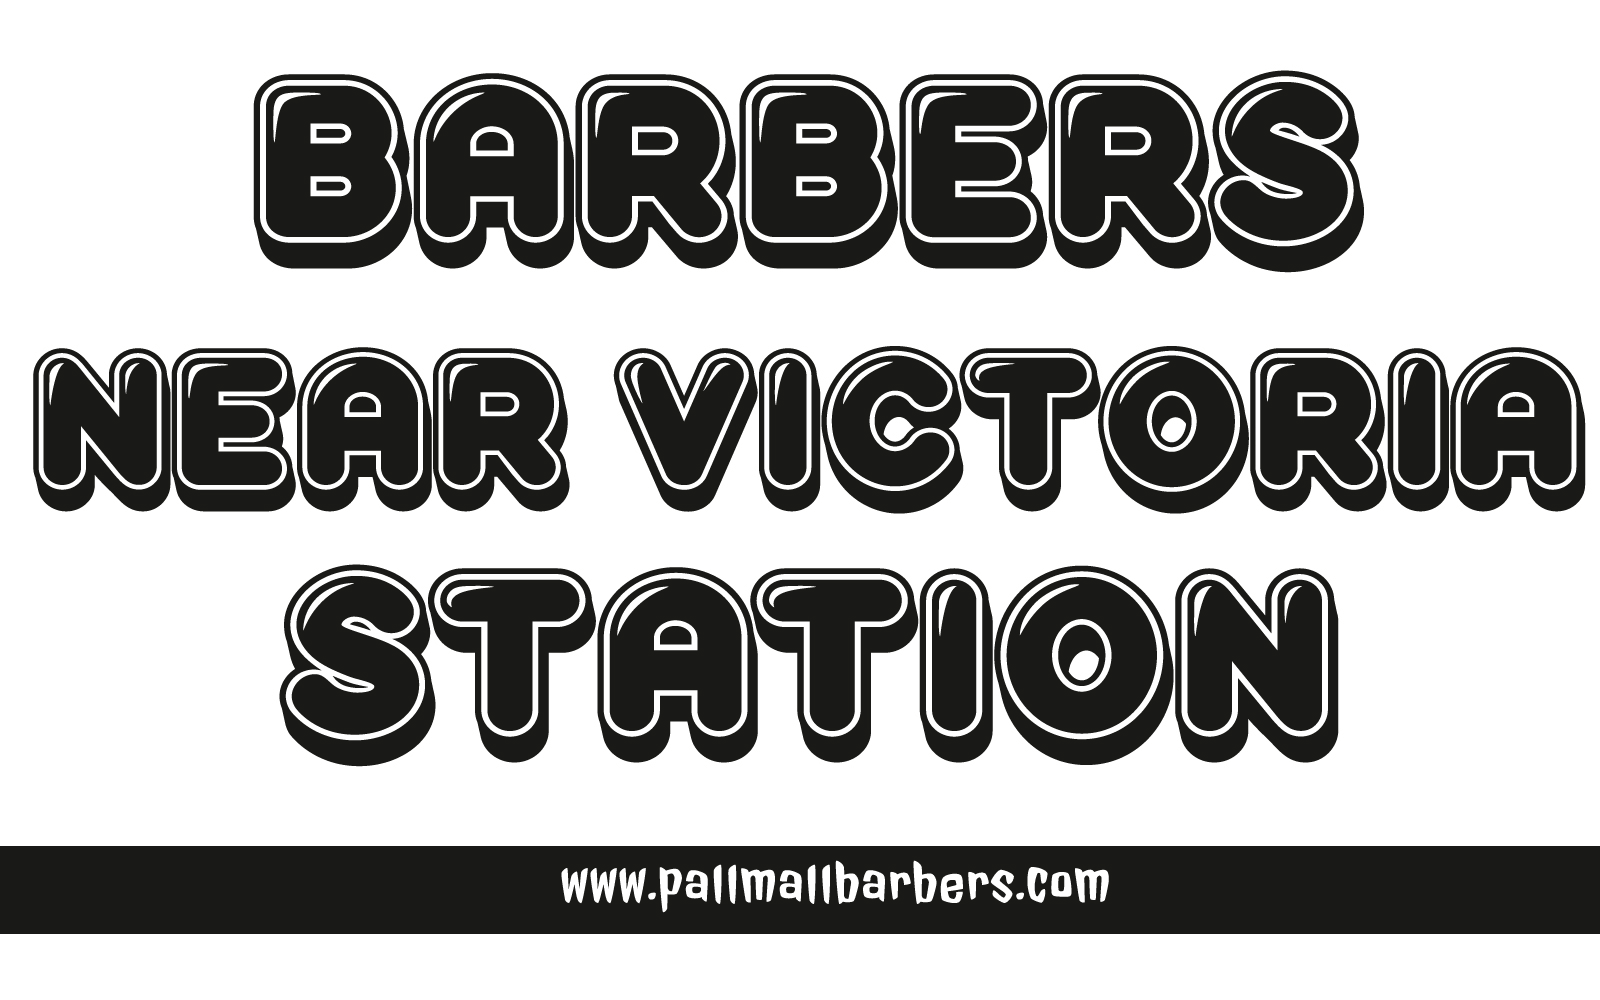 Barbers Near Victoria Station